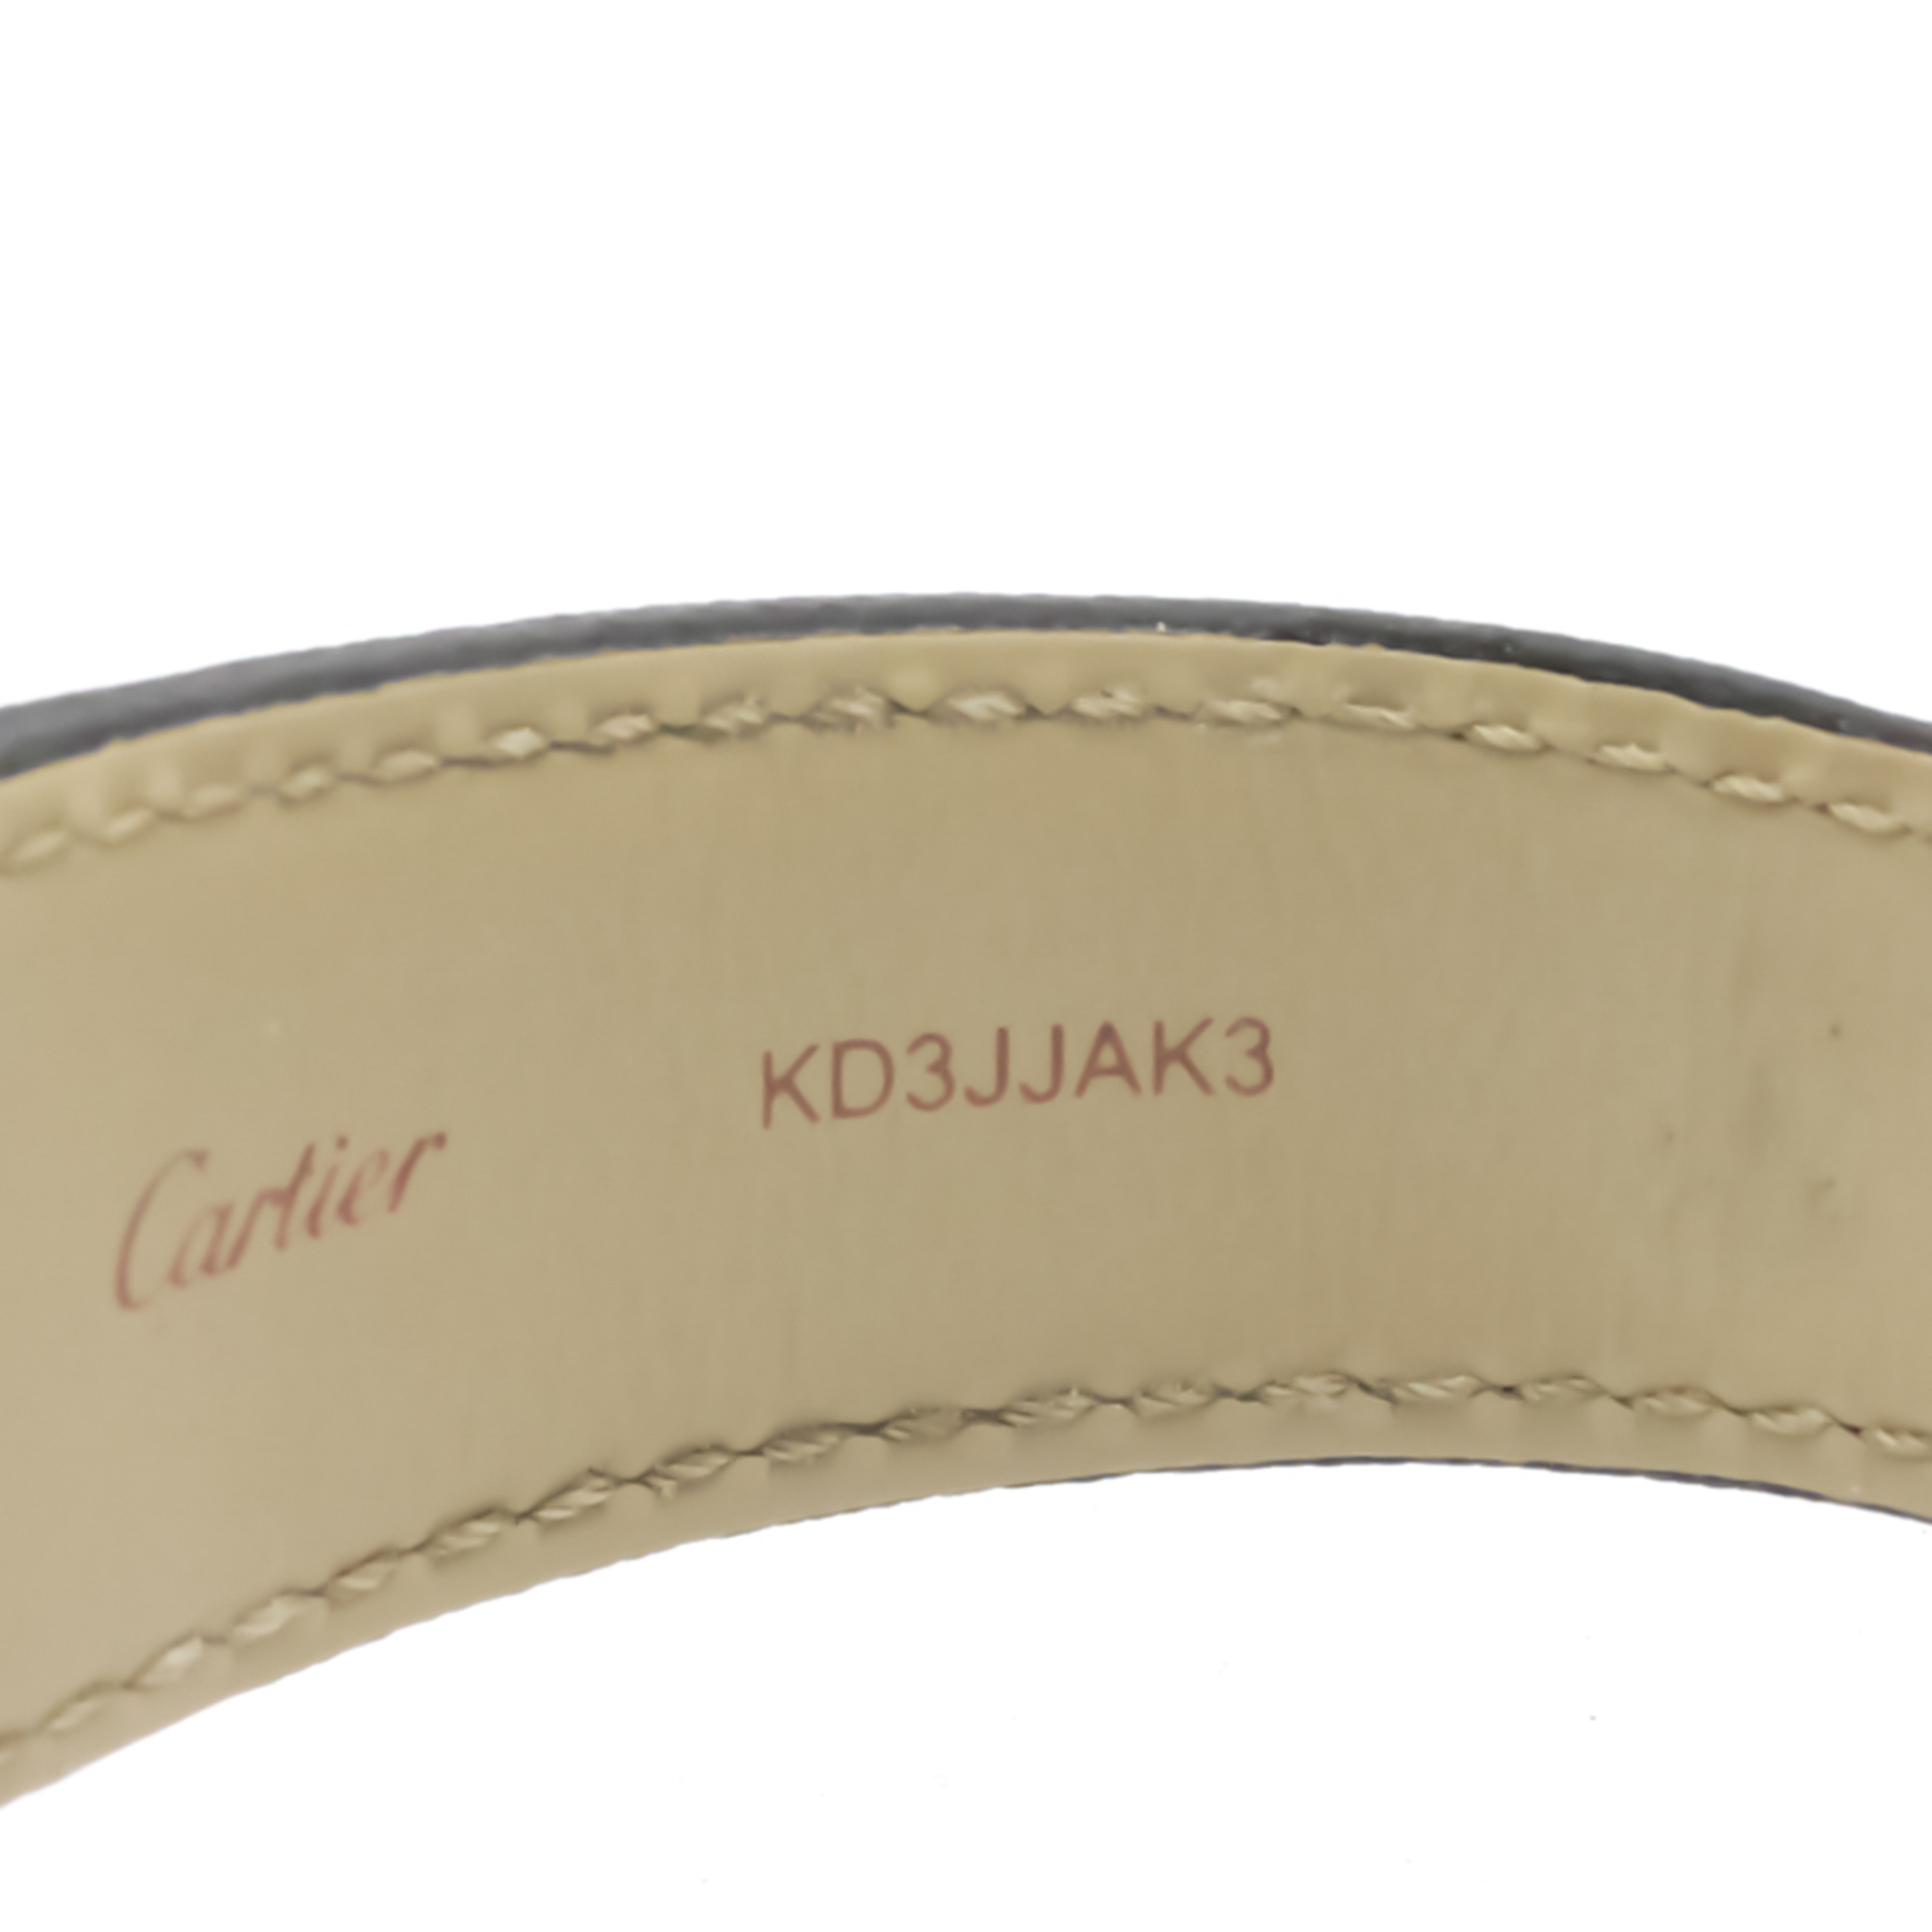 Cartier Calibre De Cartier Automatic Stainless Steel Men's Dress Watch W7100037